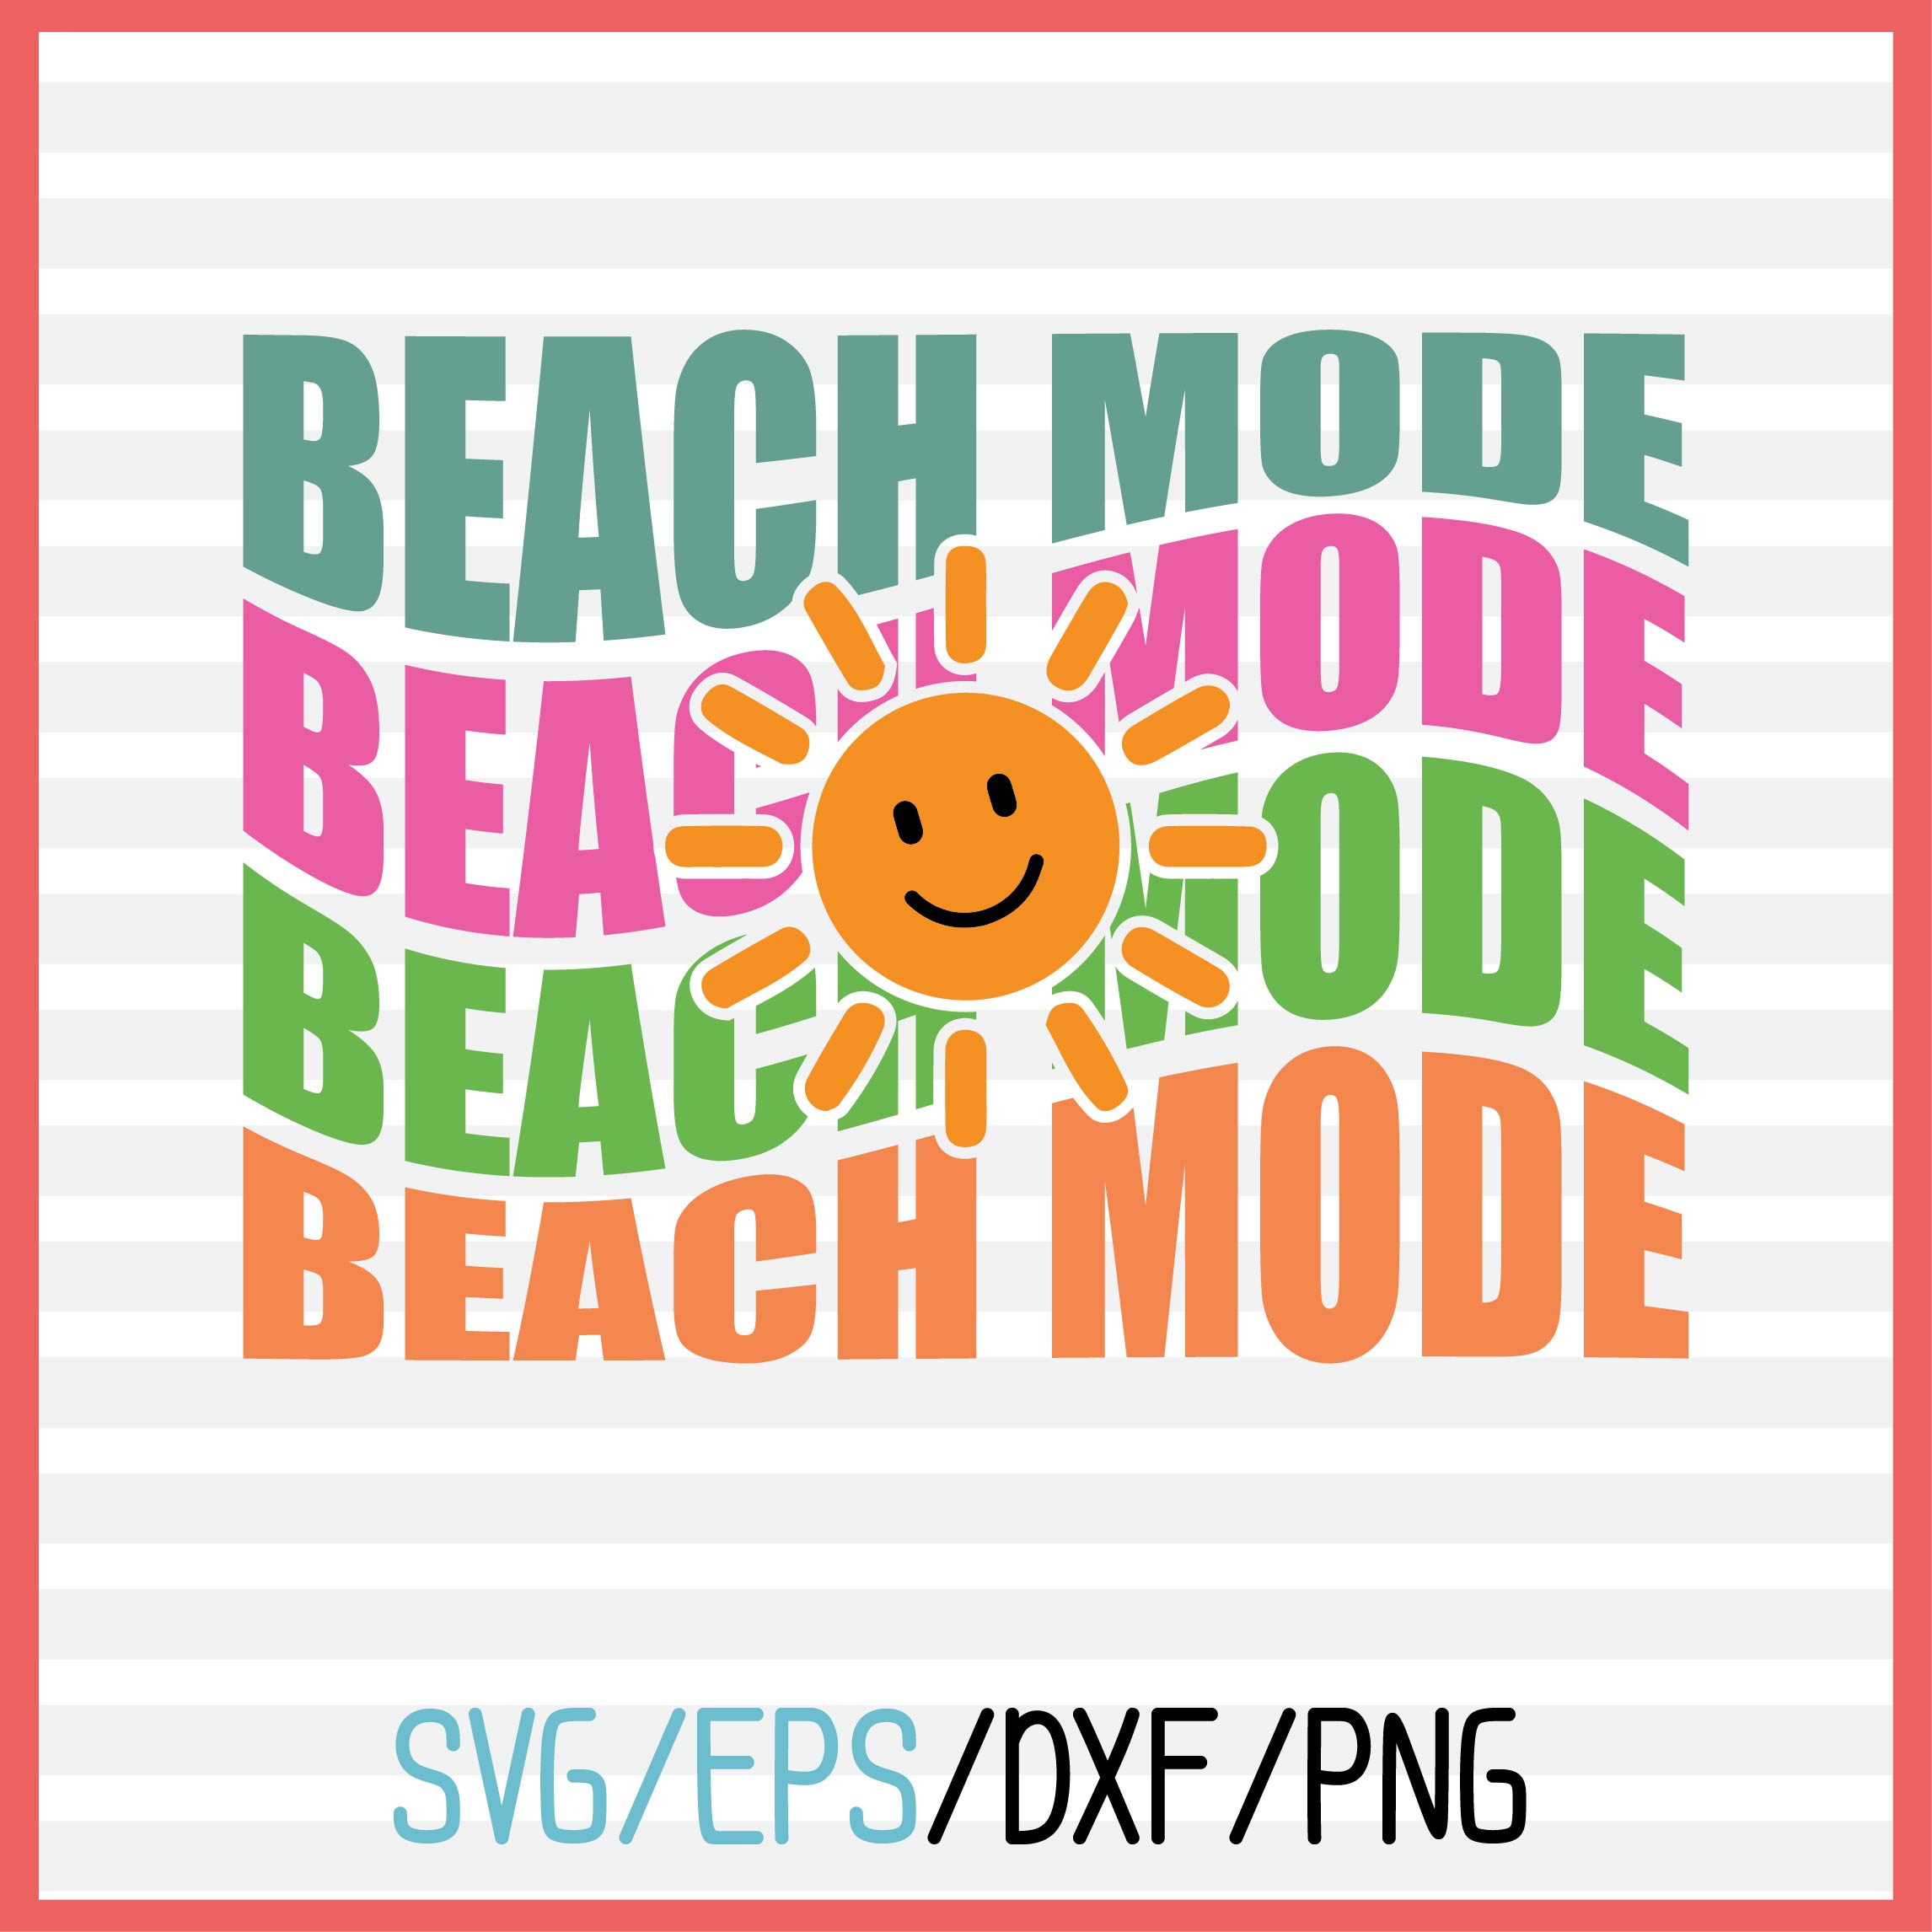 About Beach mode retro svg design cover image.